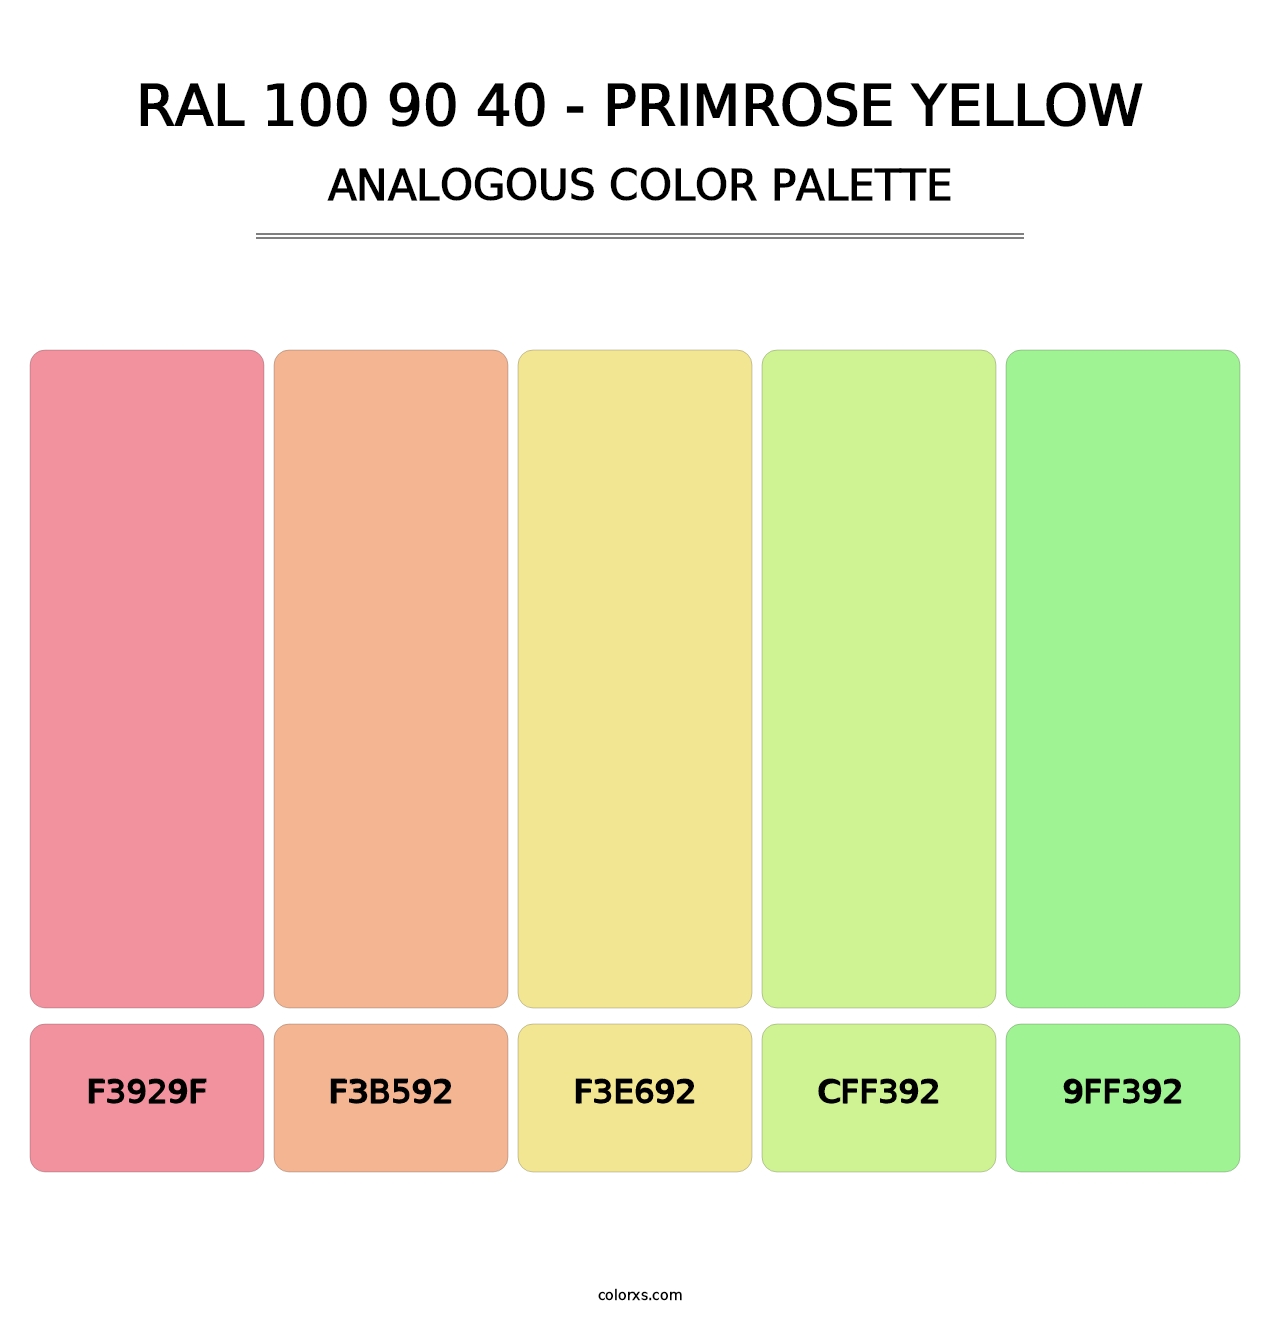 RAL 100 90 40 - Primrose Yellow - Analogous Color Palette